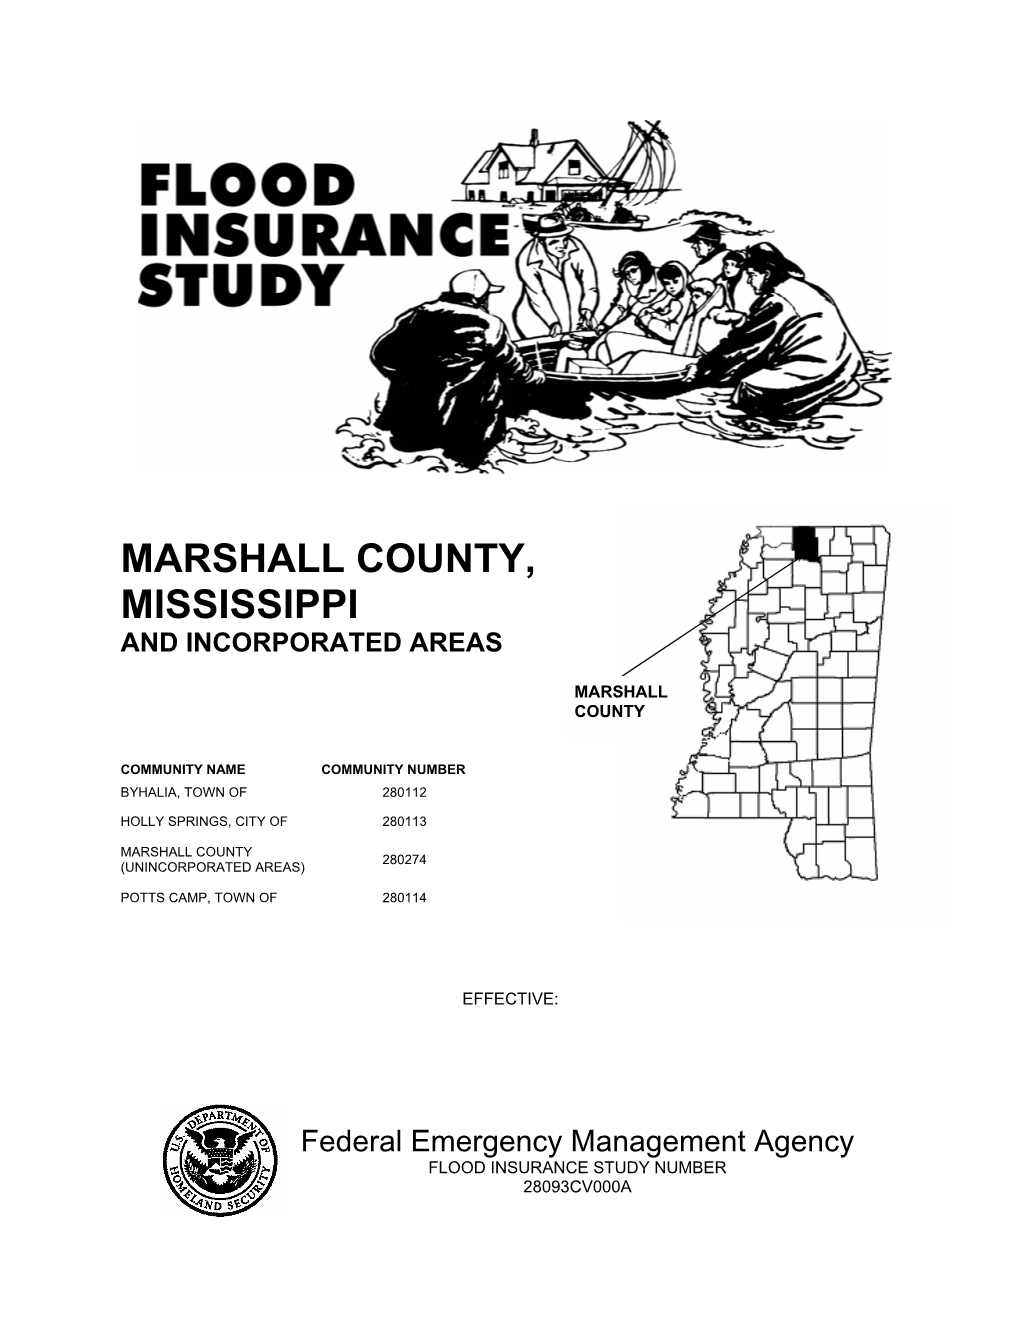 Flood Insurance Study Number 28093Cv000a